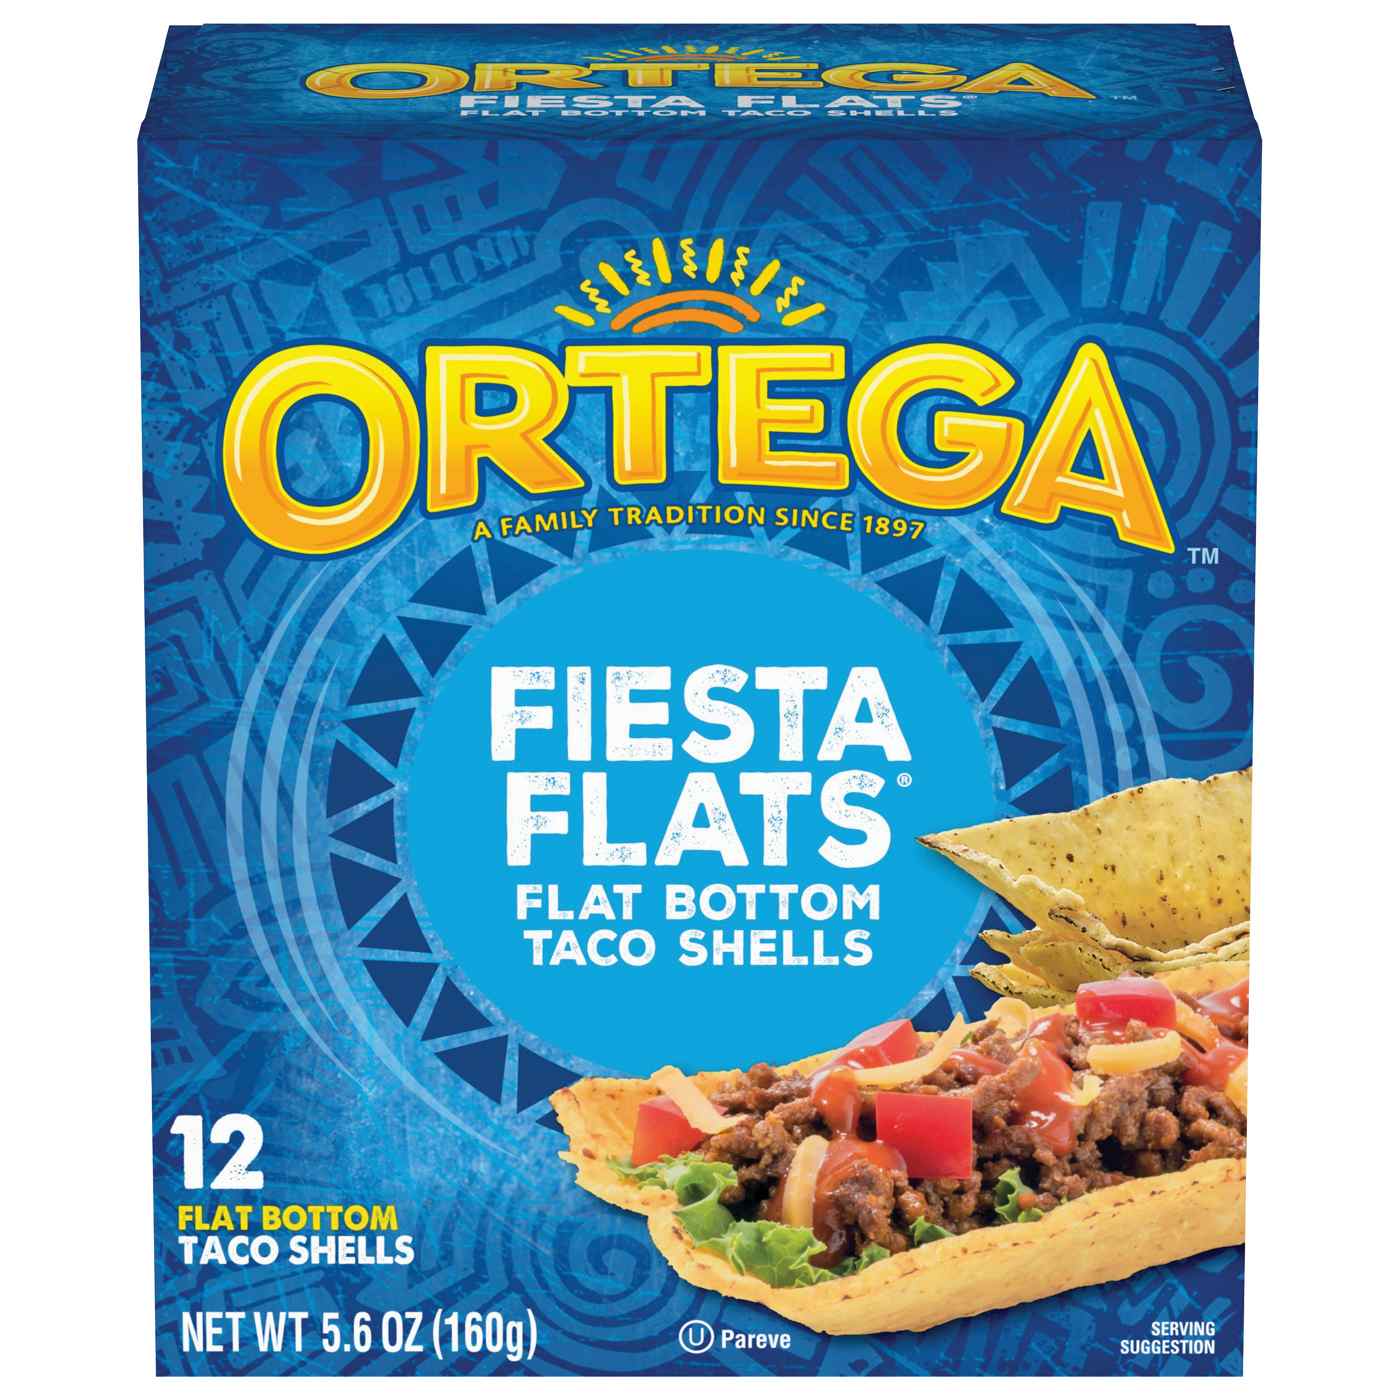 Ortega Fiesta Flats Flat Bottom Taco Shells; image 1 of 3